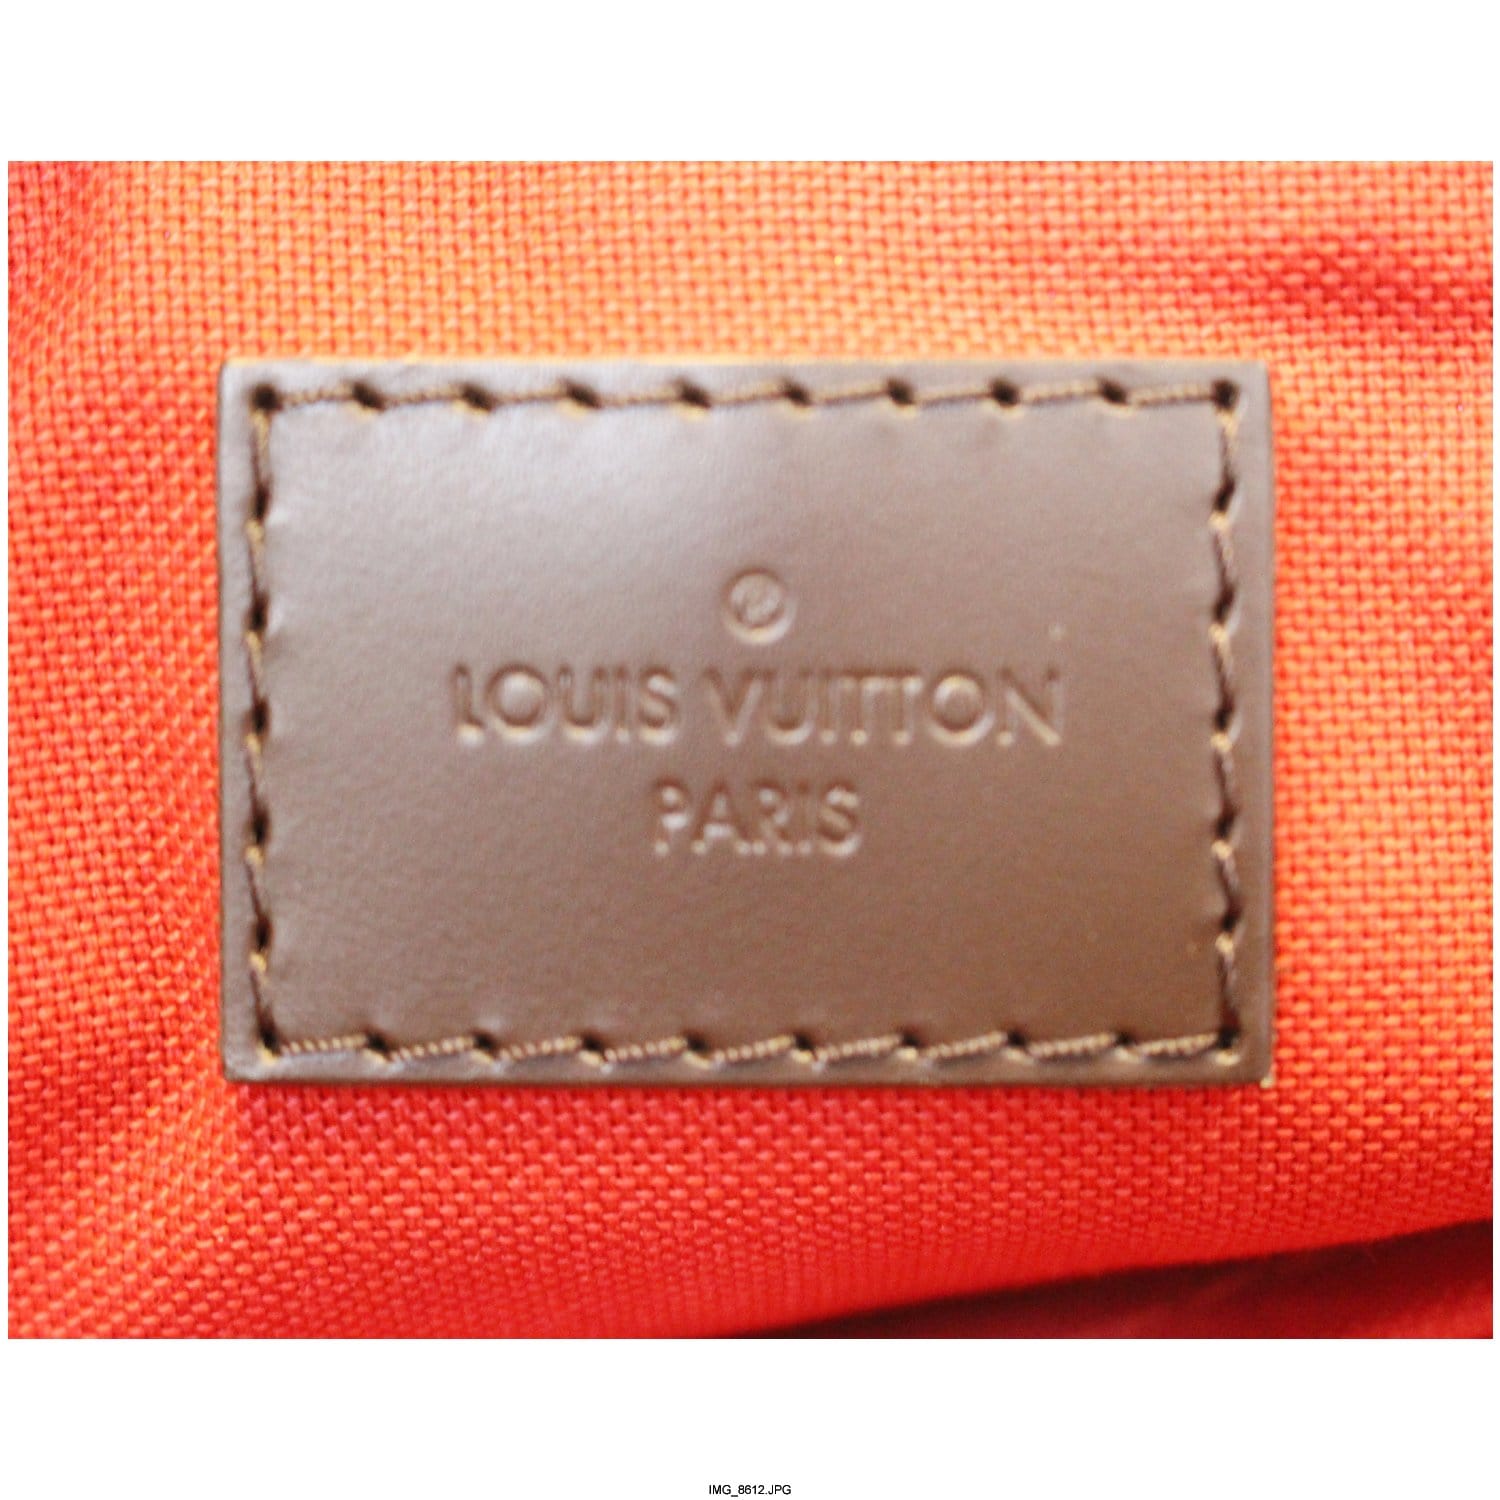 Louis VUITTON year 2016 - Bag 'Siena' GM 31cm in ebony c…